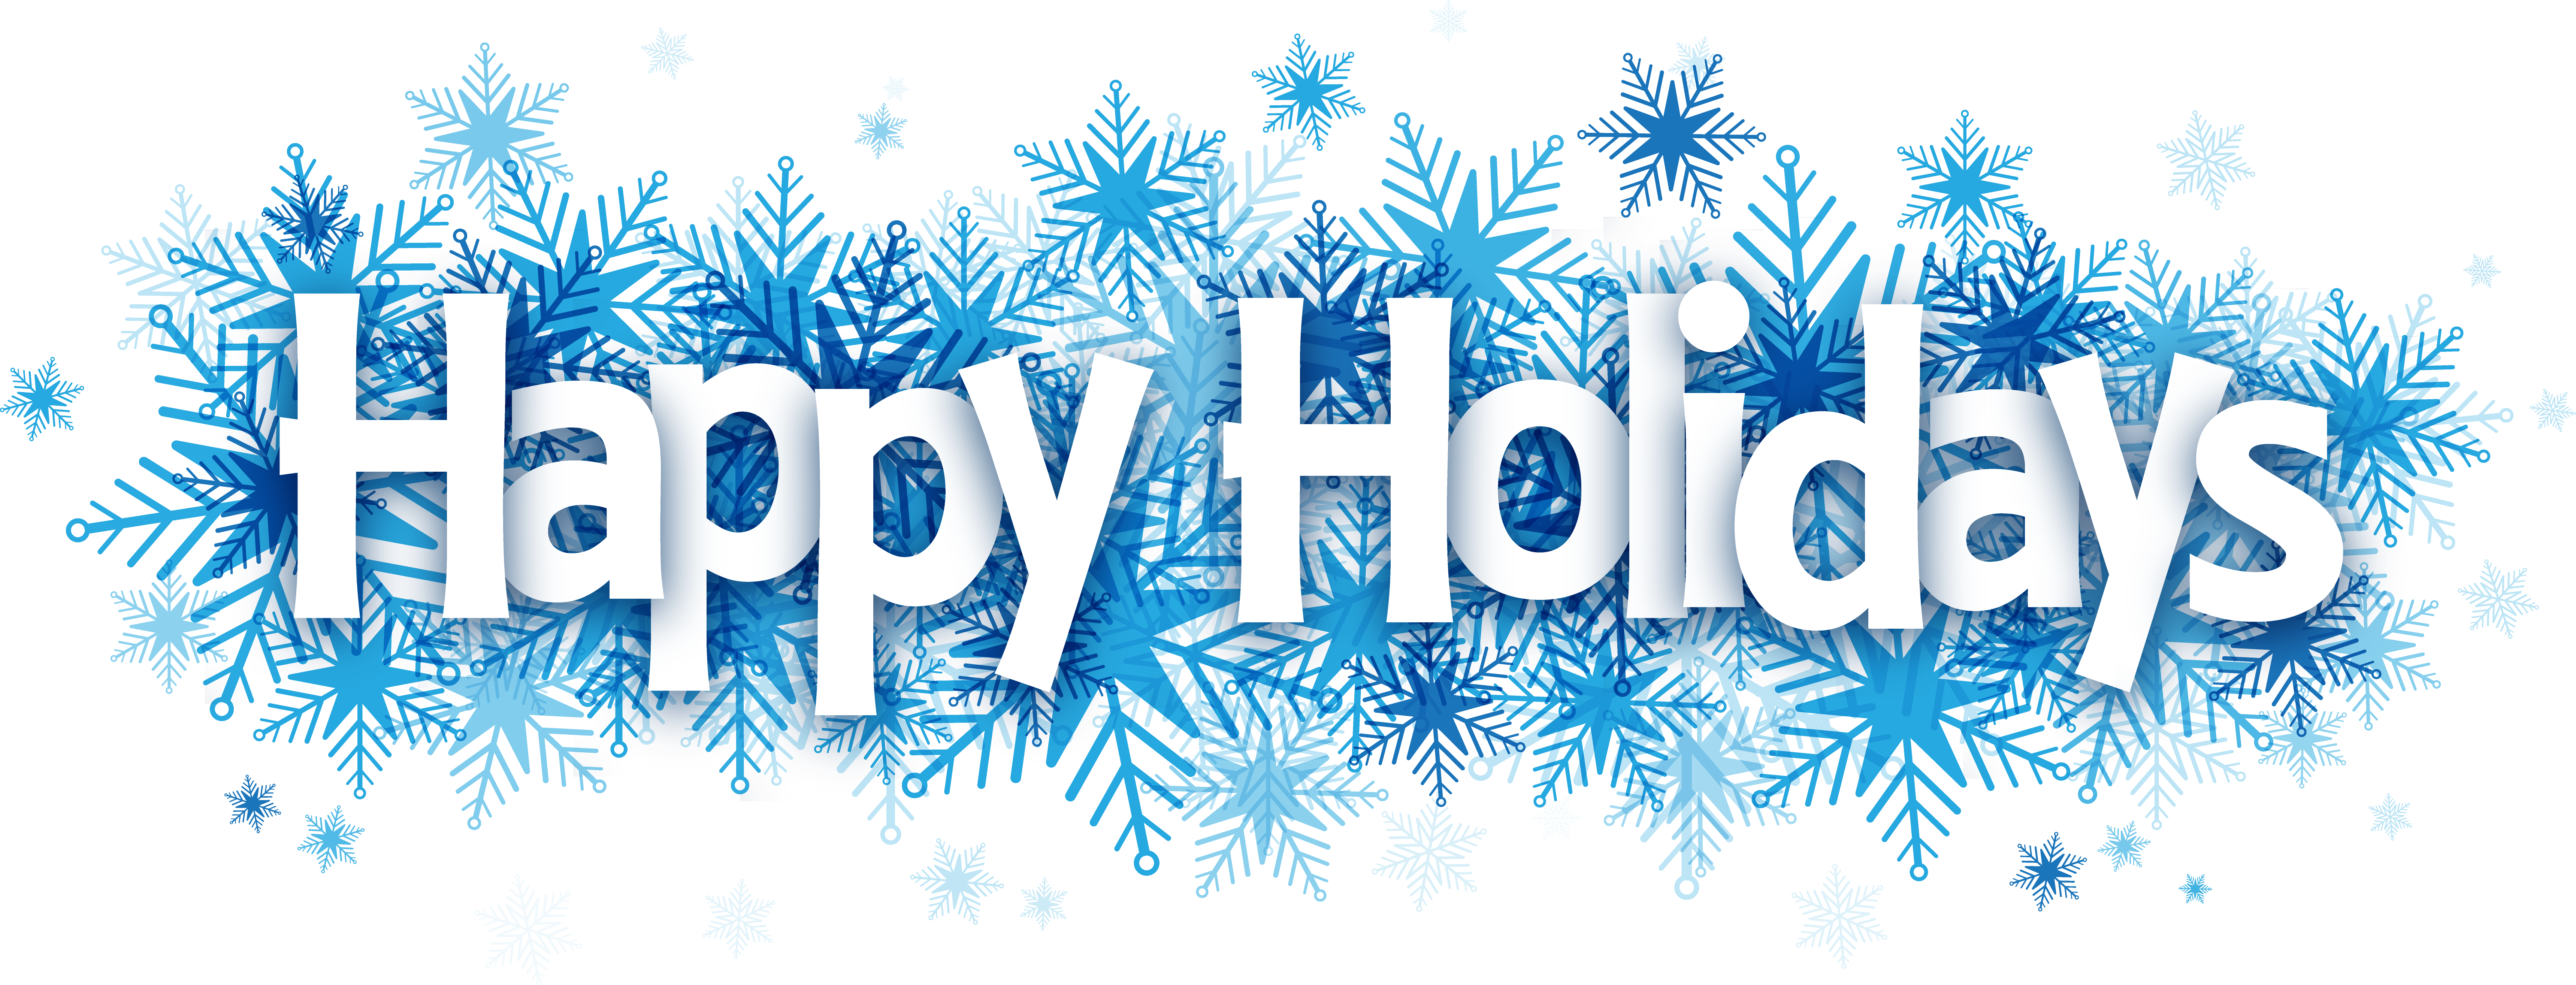 Free Happy Holidays Cliparts Download Free Happy Holi - vrogue.co